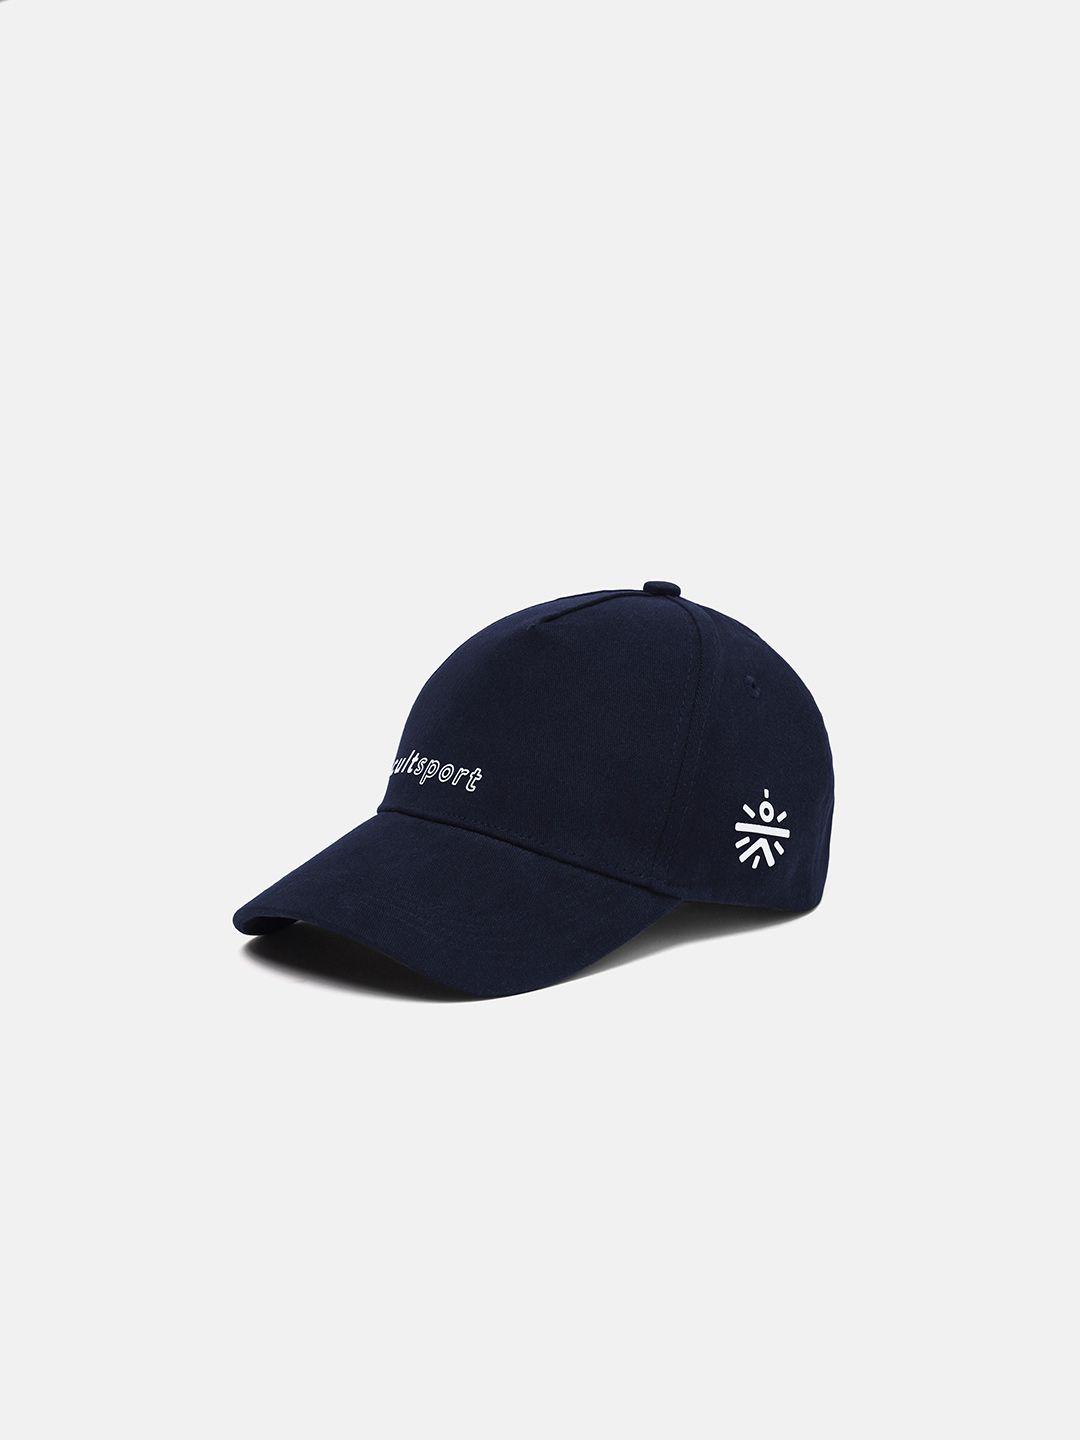 cultsport brand logo printed pure cotton adjustable baseball sports cap